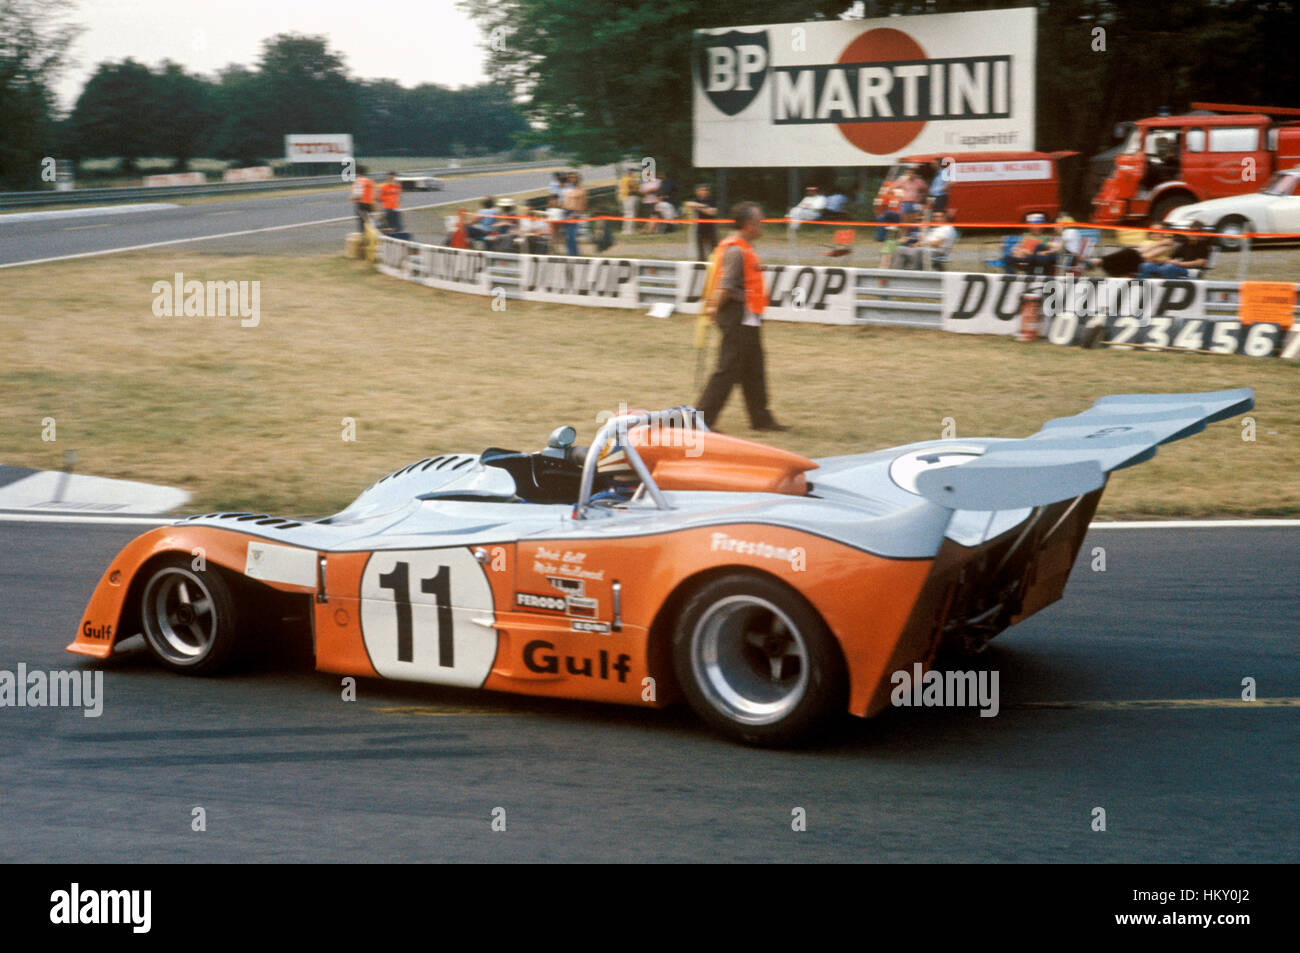 1974 Mike Hailwood GB Golfo GR7 Le Mans 24 Ore 4 GG Foto Stock